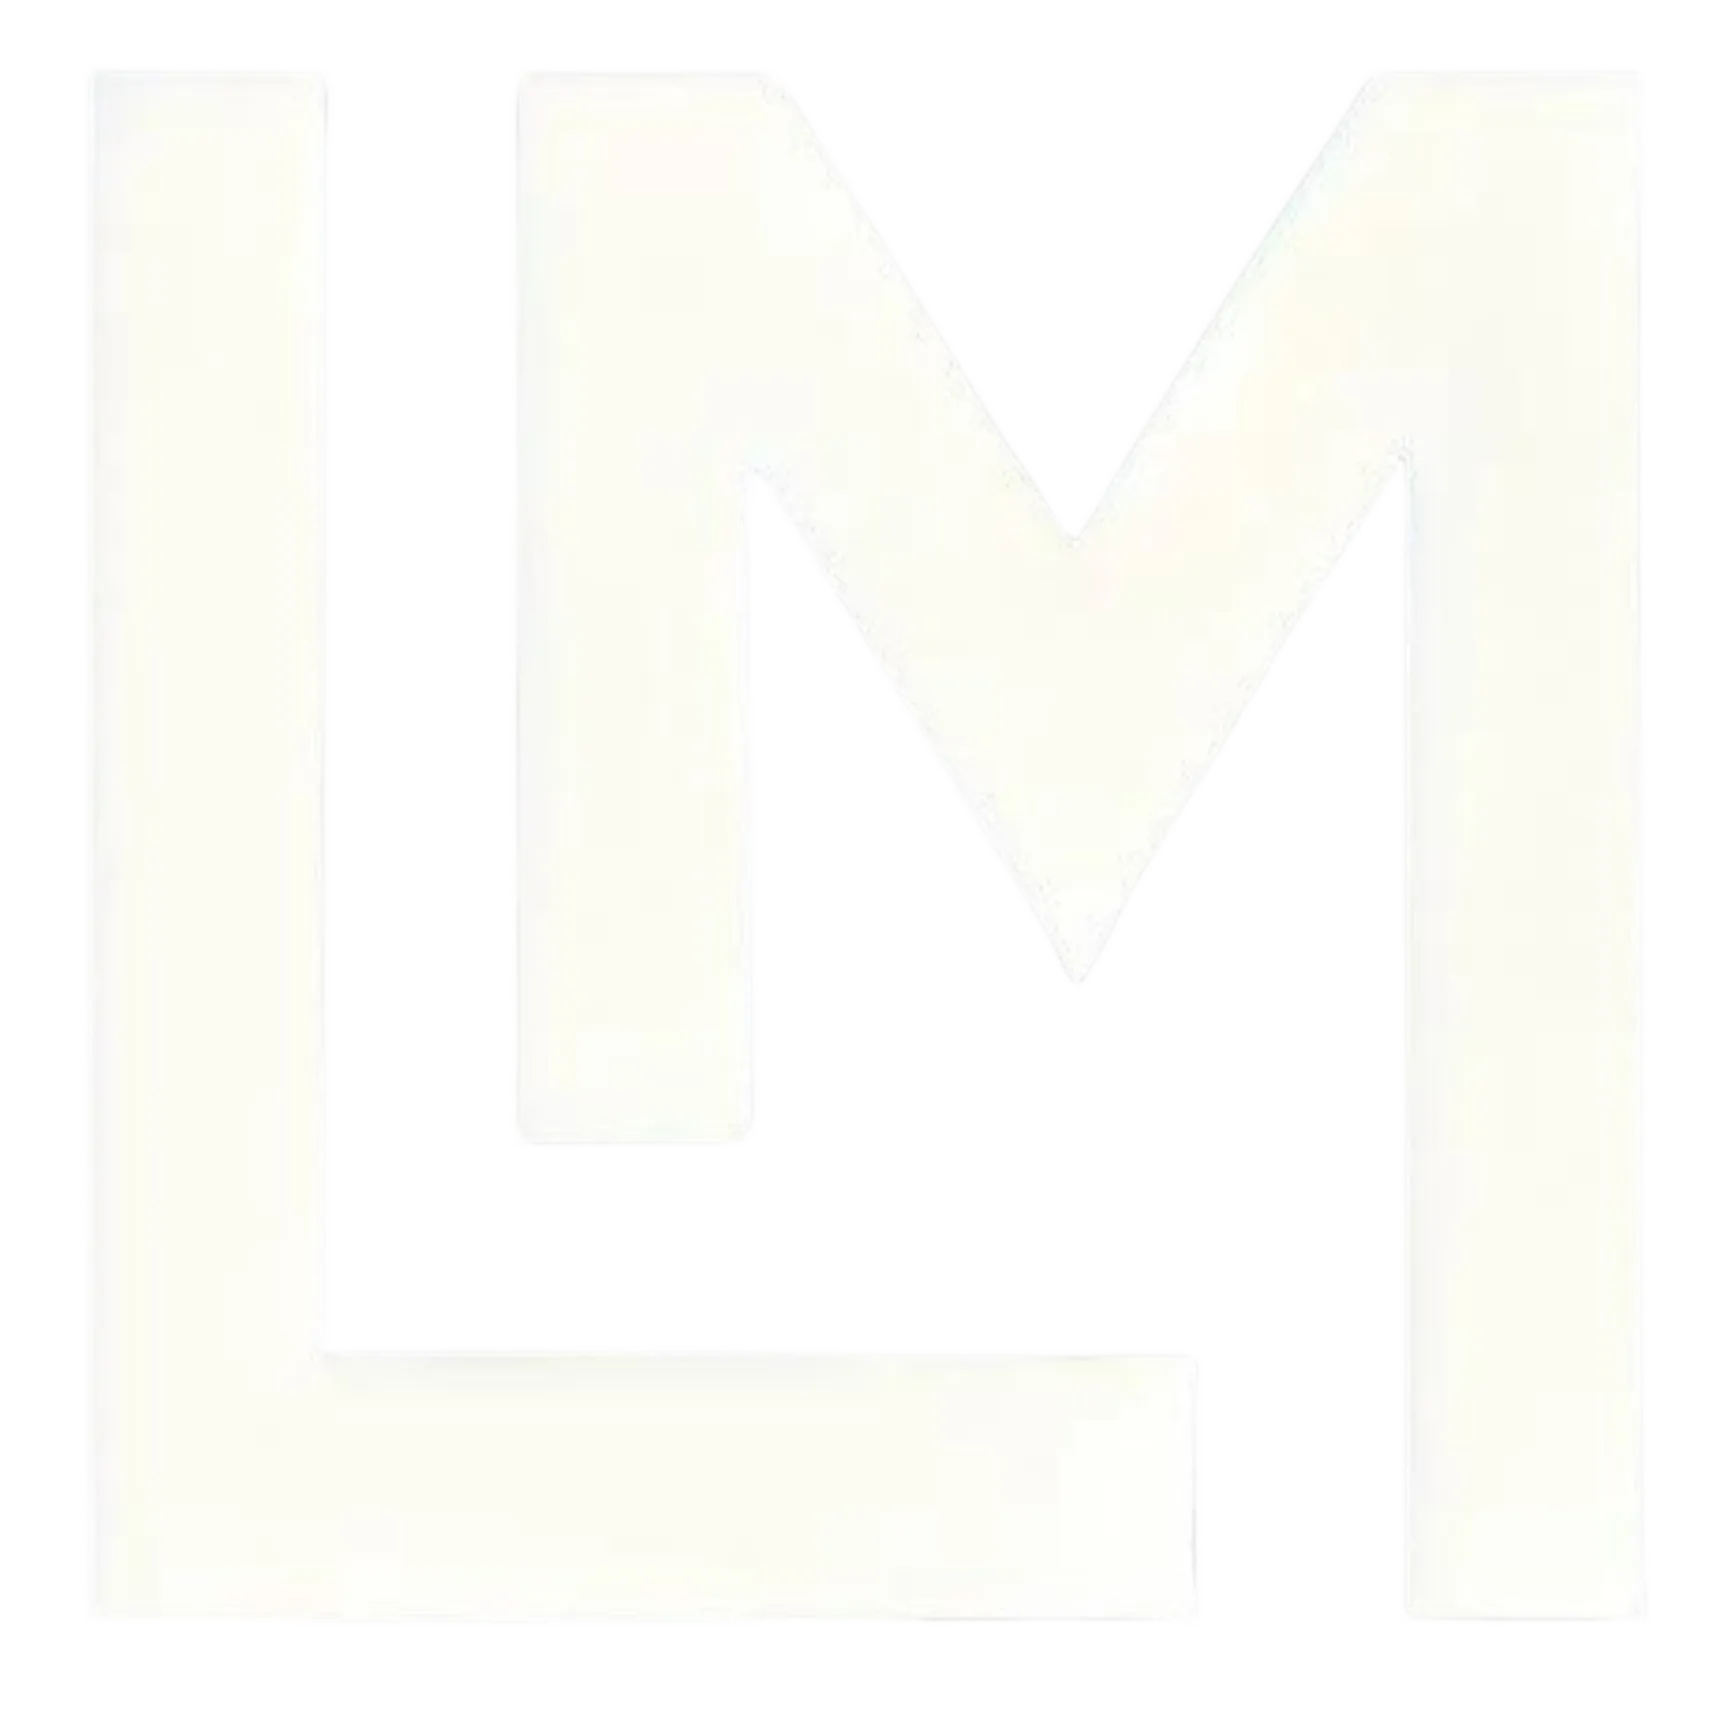 Liam Miller's initials as a logo